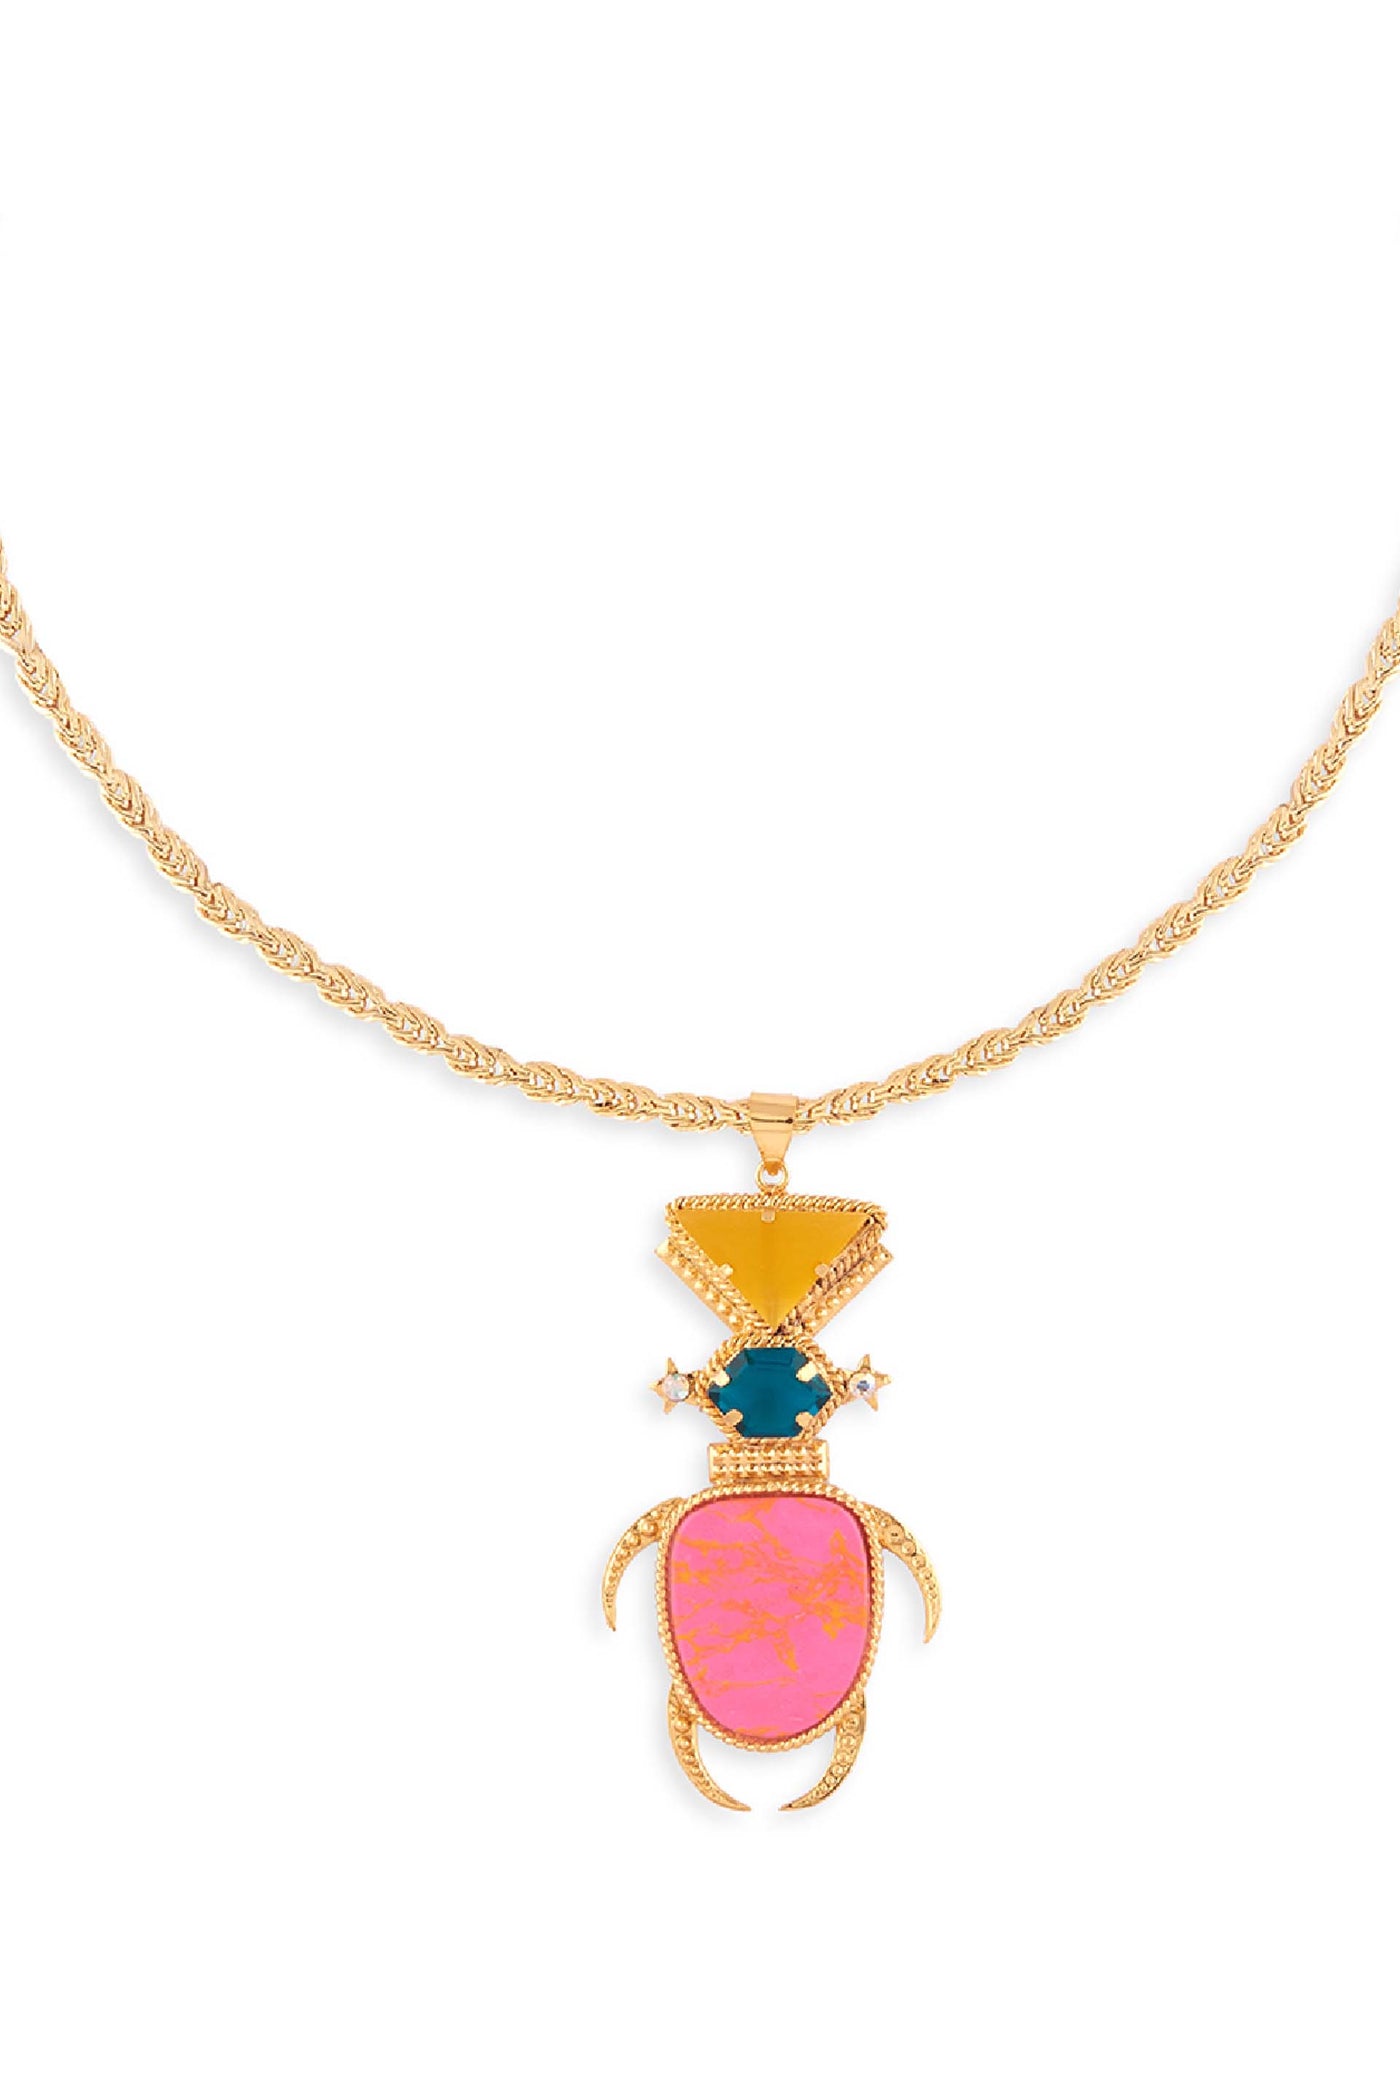 valliyan space bug necklace pink fashion jewellery online shopping indian designer wear